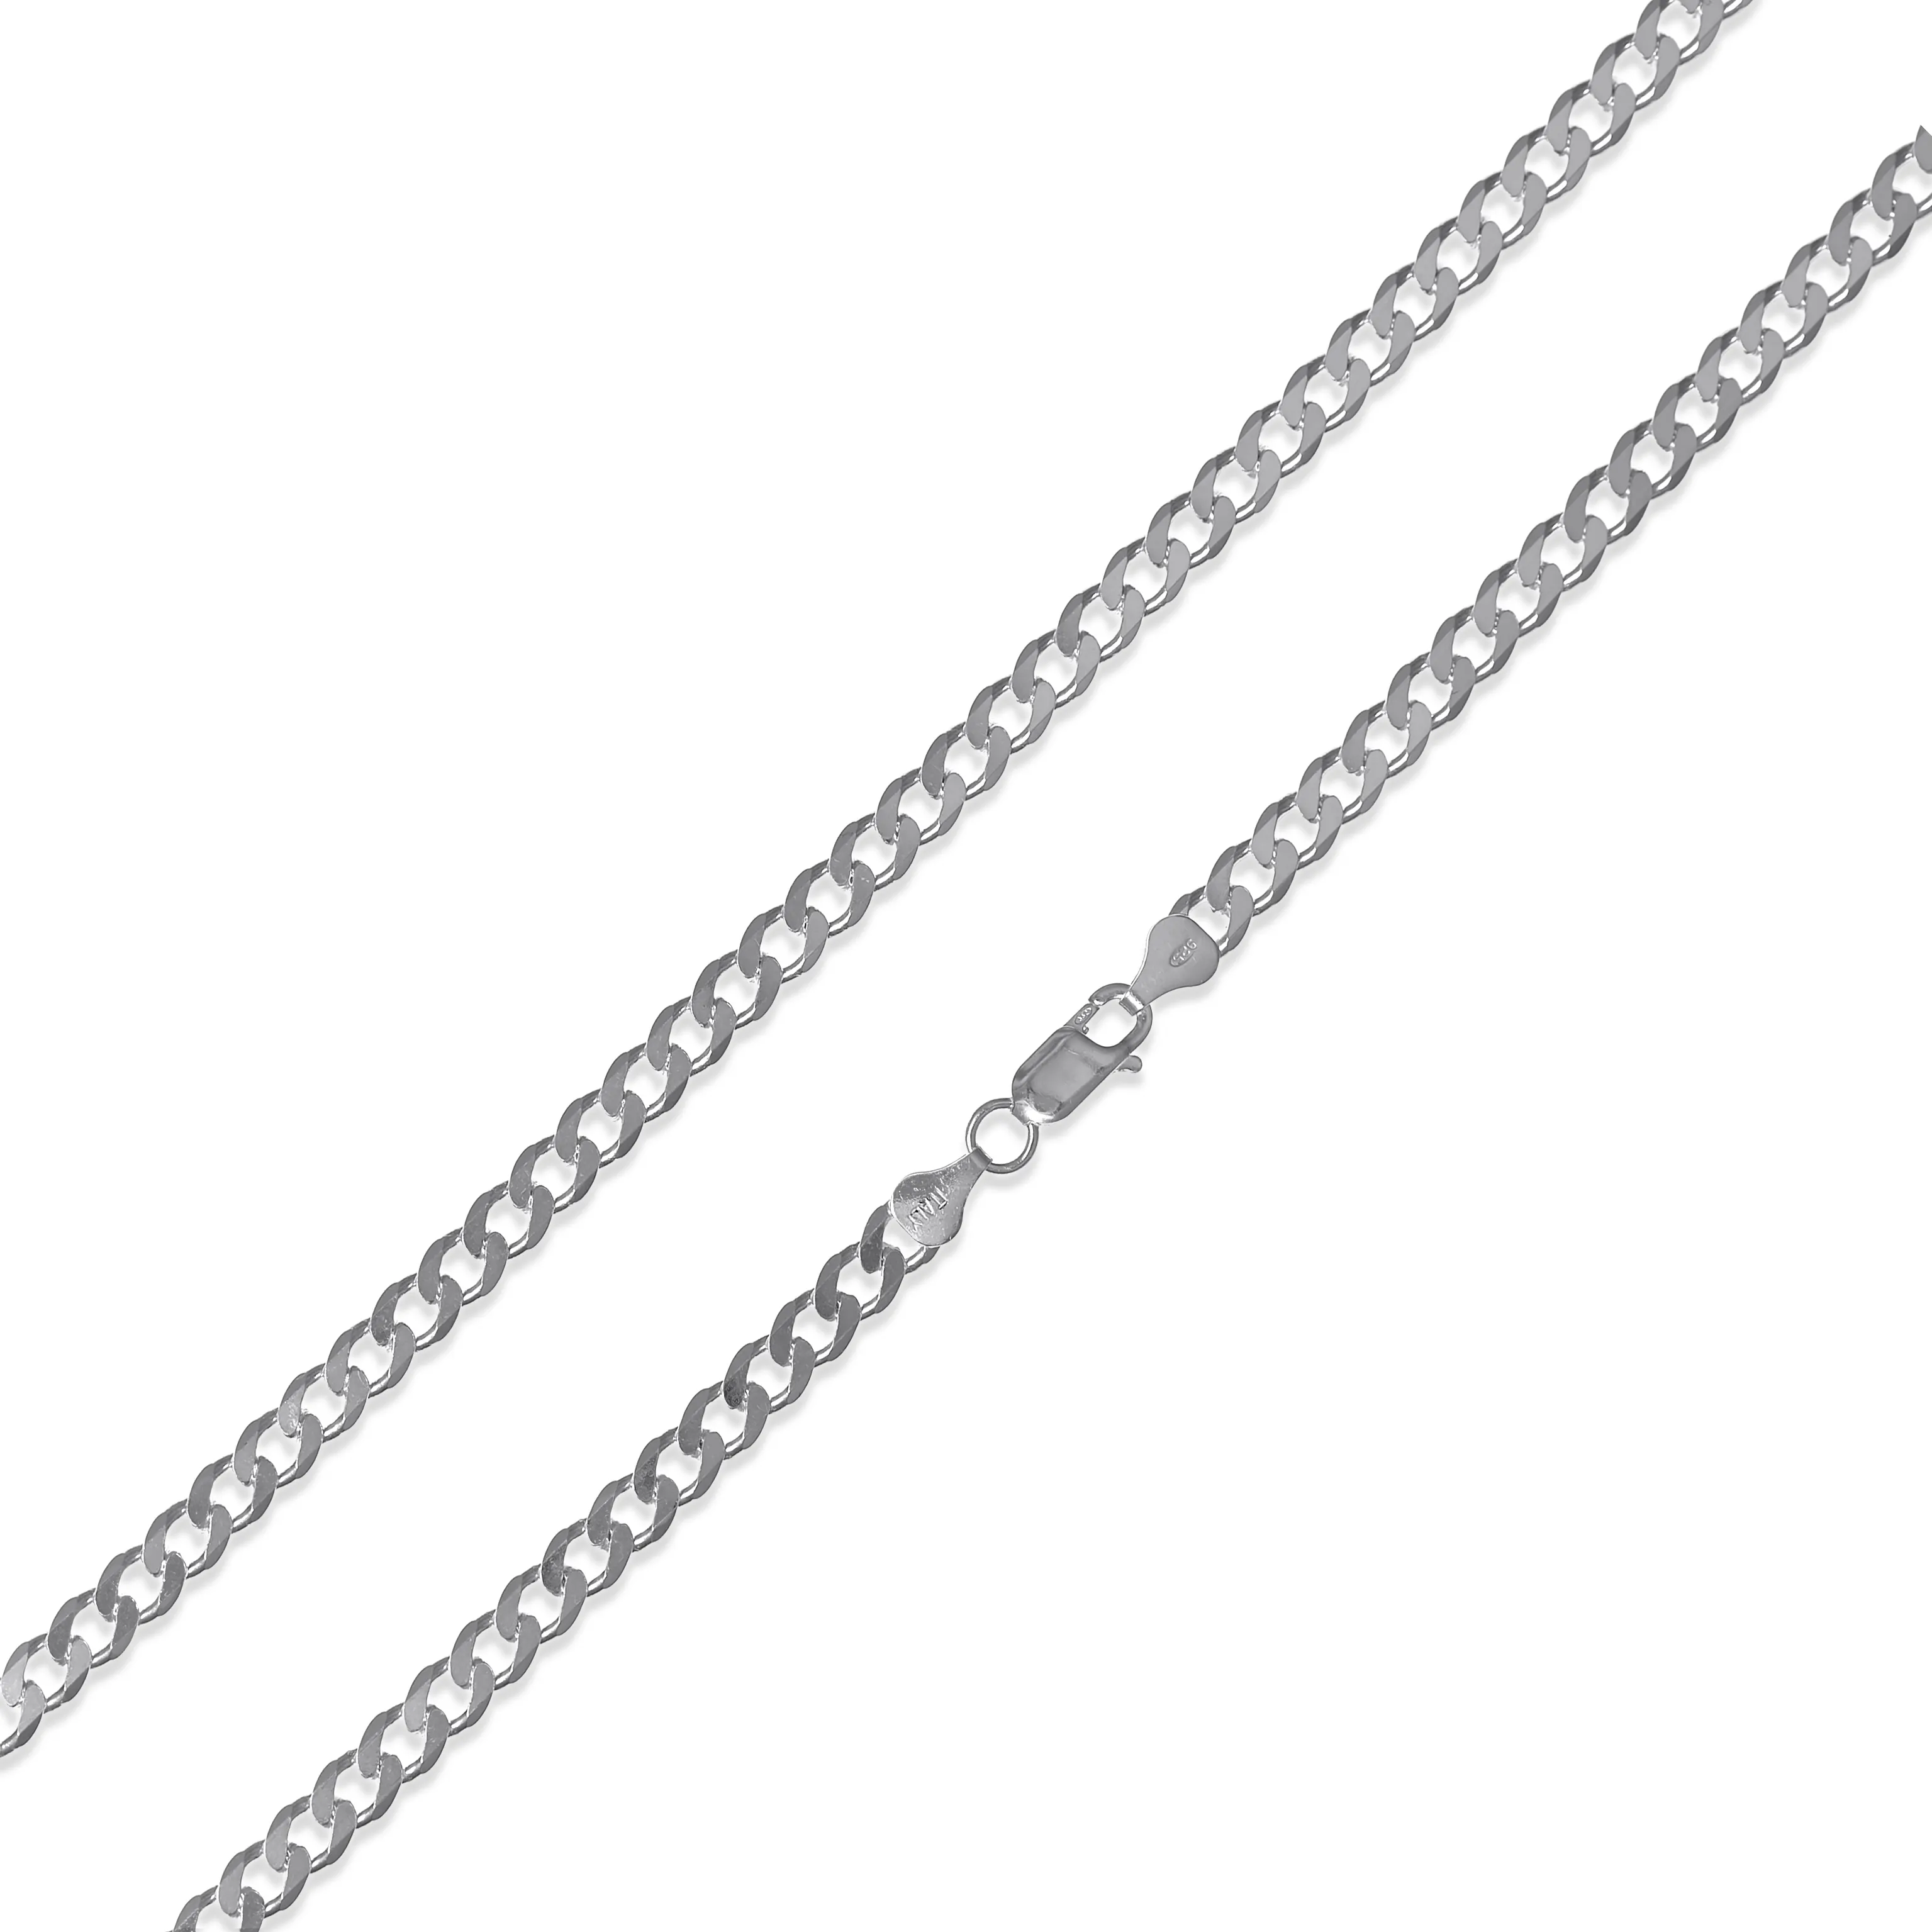 Top Quality Made in Italy Necklace Curb Chain in Silver 925 verfügbar in viele messgeräte und länge Men Women Jewelry